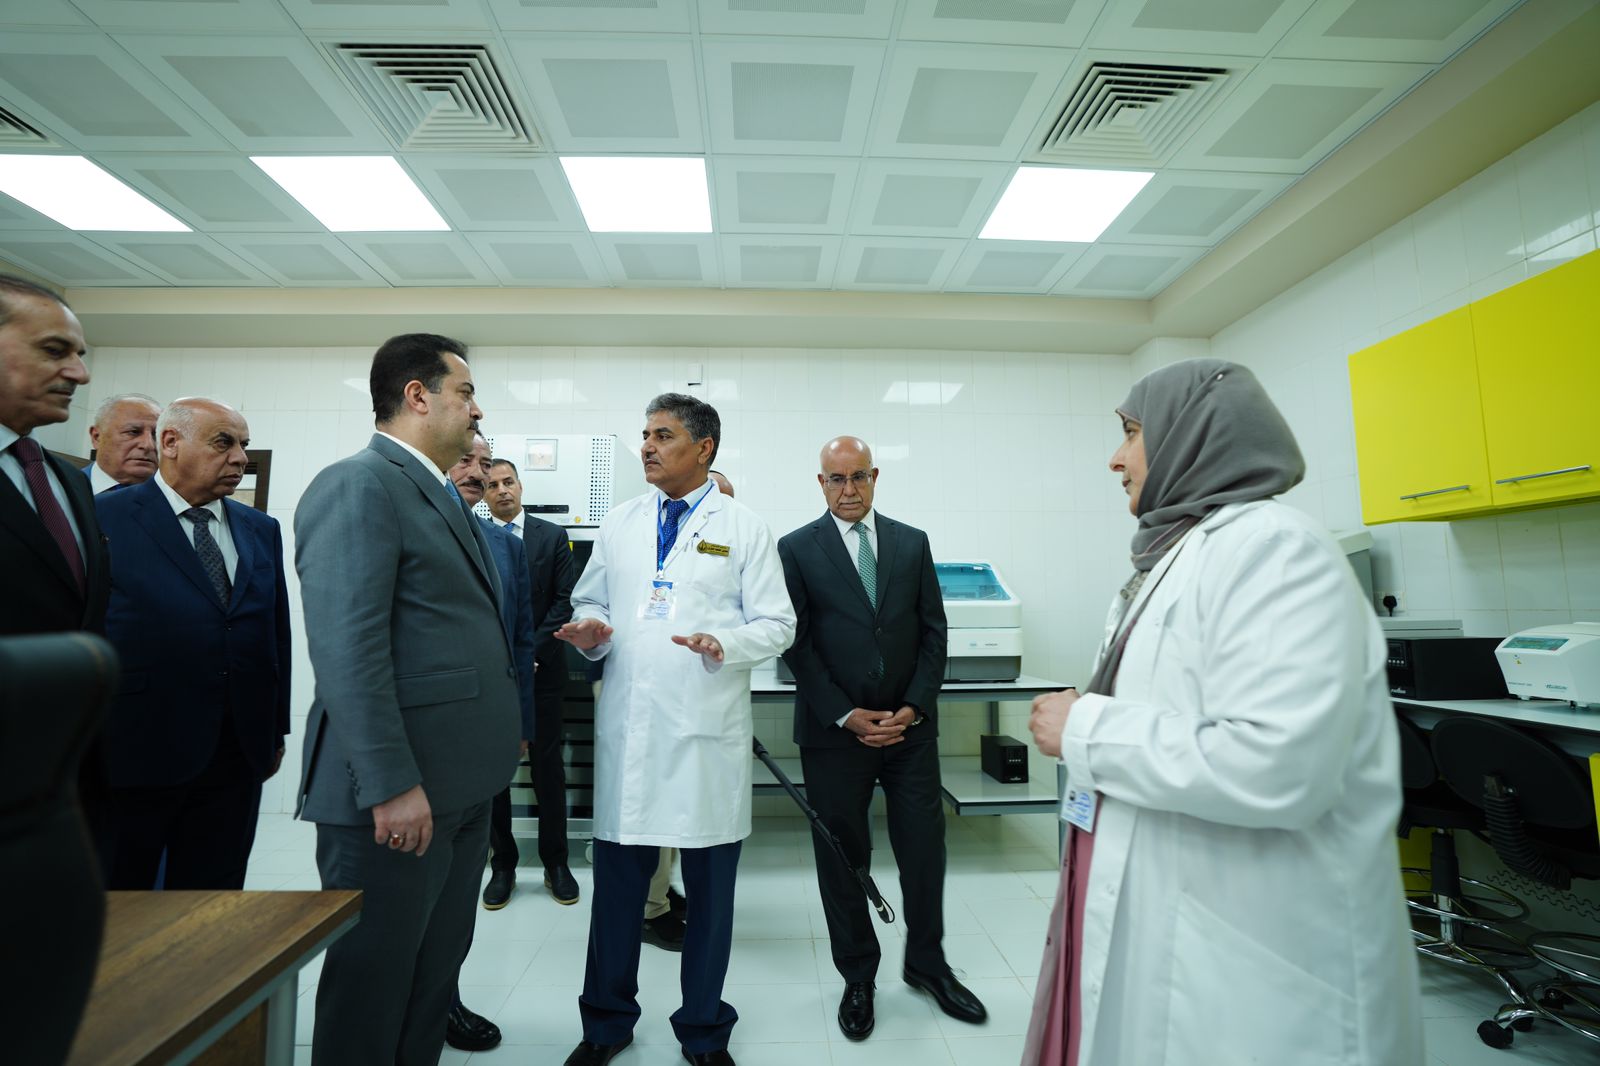 PM Al-Sudani Launches Reconstruction Projects in Mosul and Inaugurates Al-Hadbaa Specialized Hospital